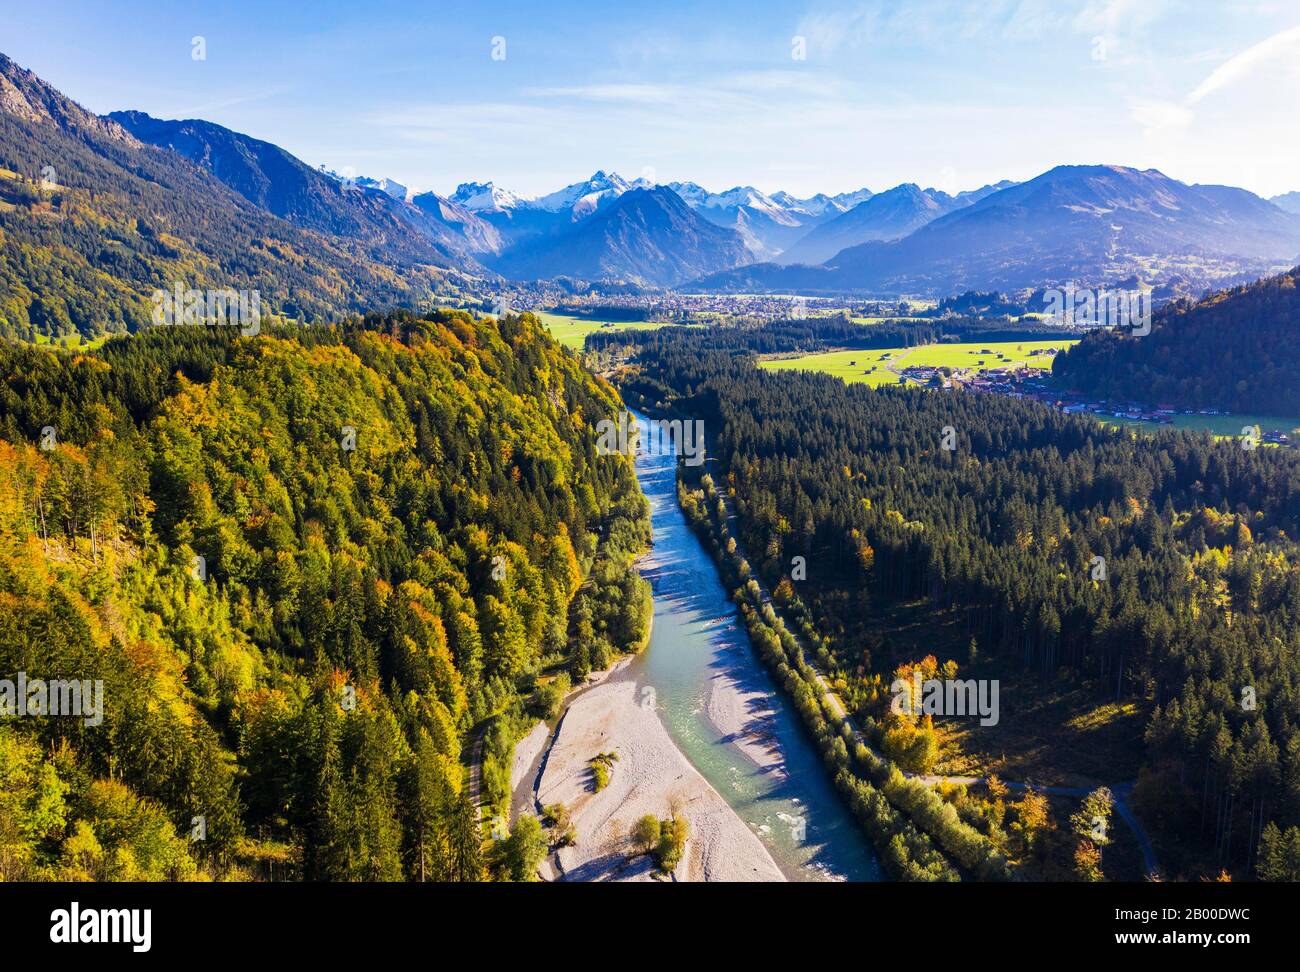 Iller, Illertal, Oberstdorf, drone recording, Oberallgaeu, Allgaeu Alps, Allgaeu, Swabia, Bavaria, Germany Stock Photo